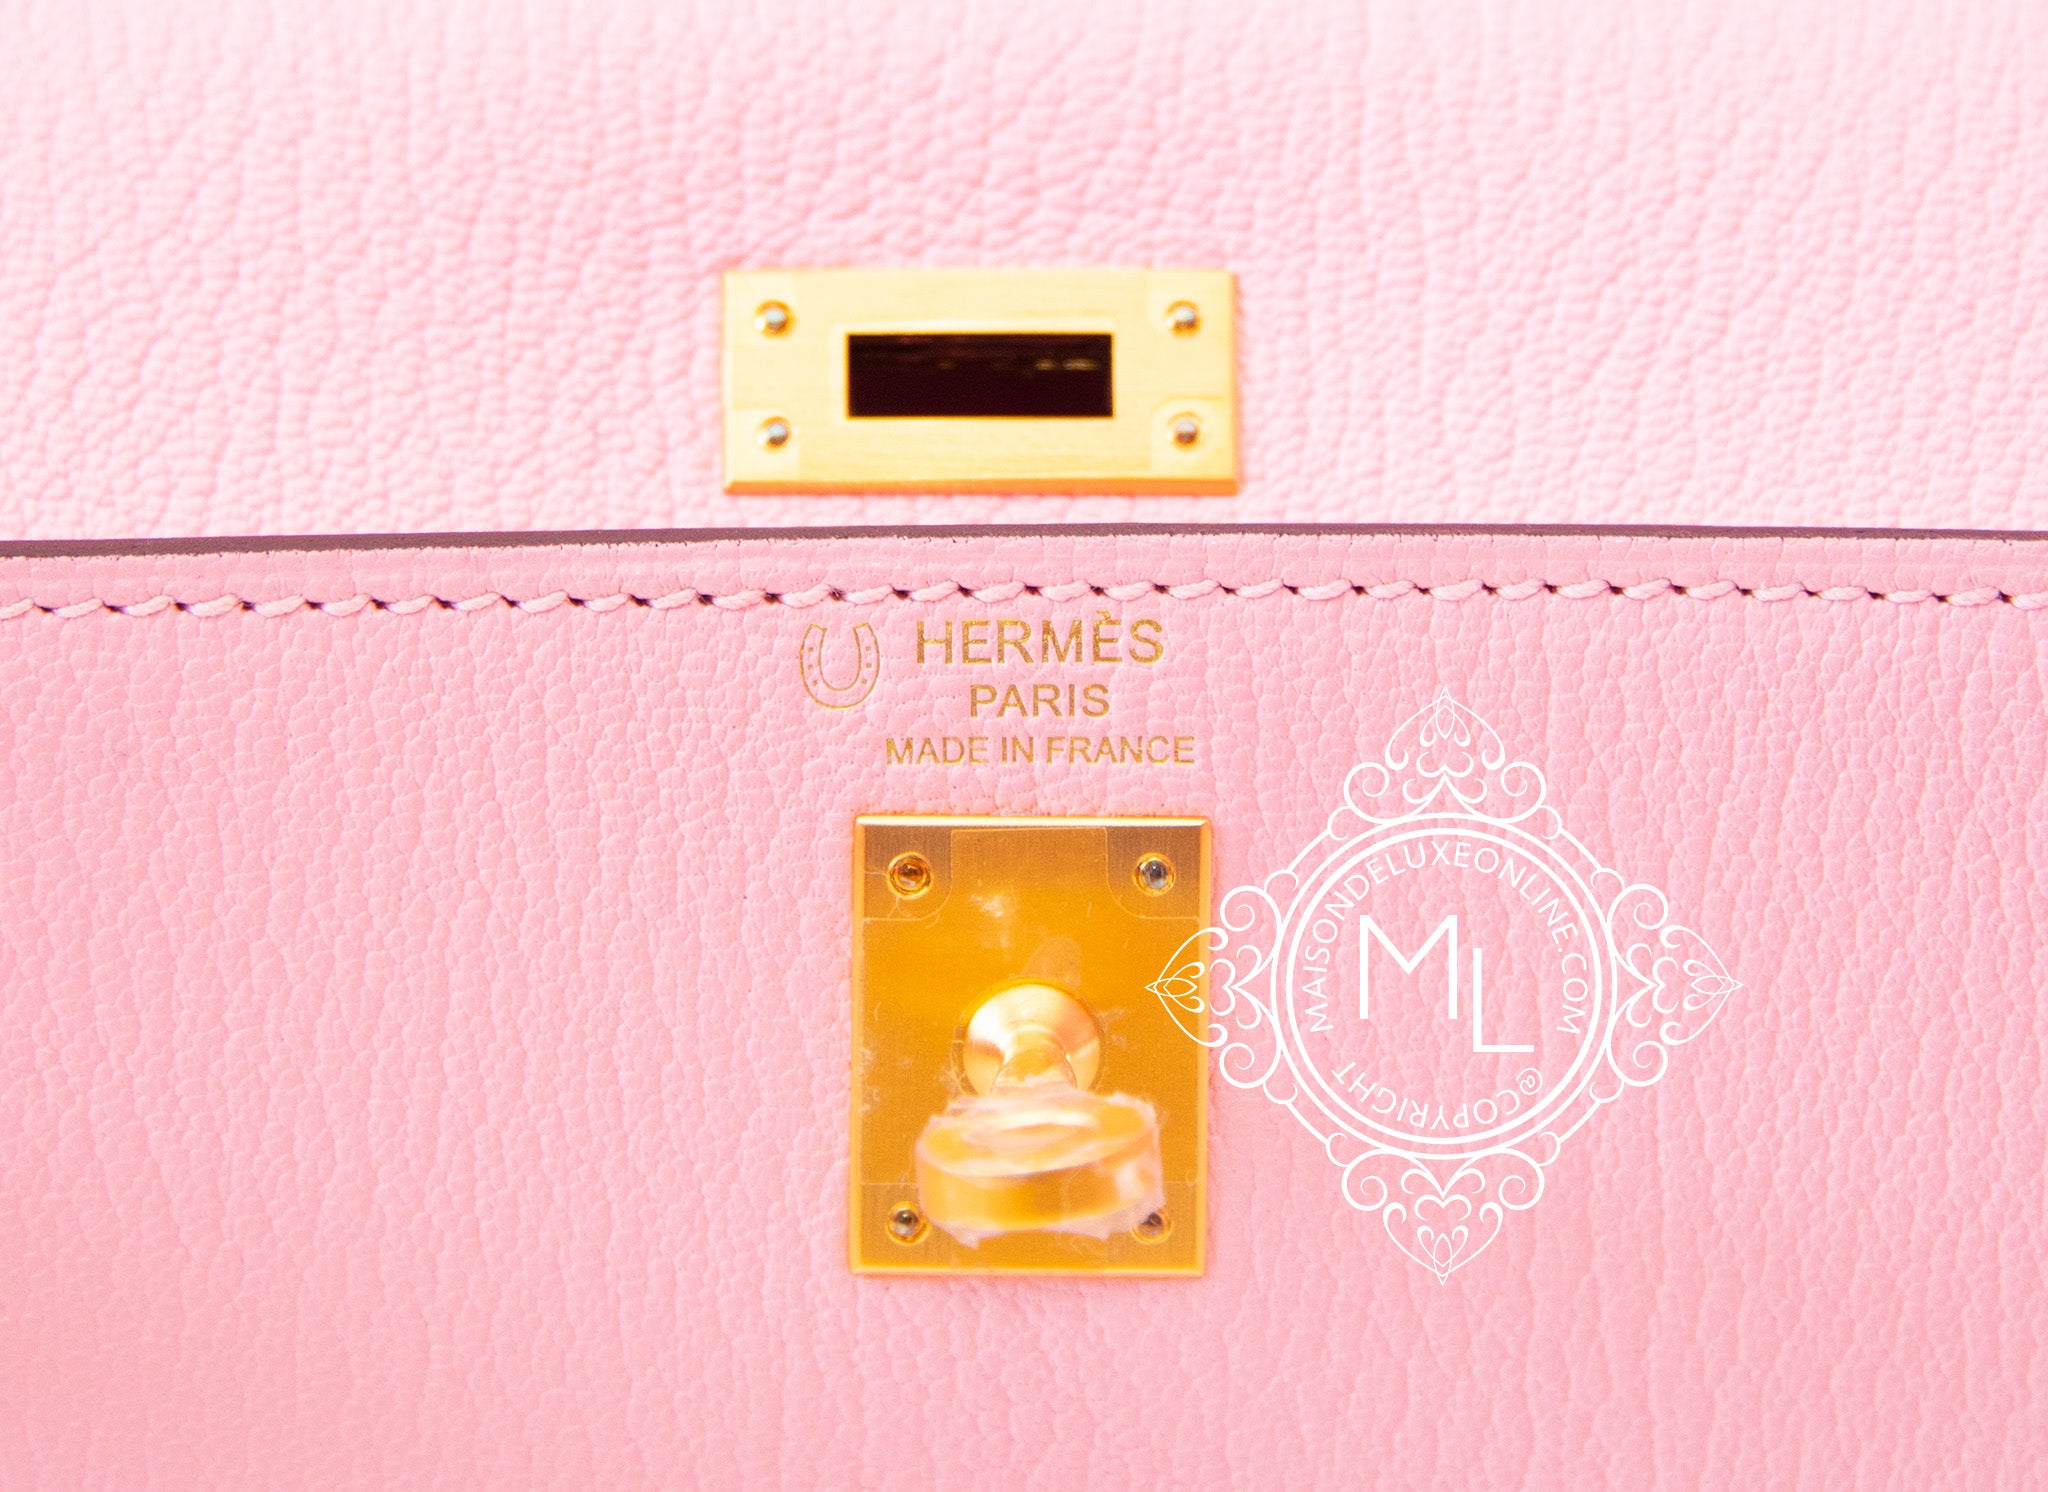 Hermès Kelly Handbag in the color Rose Sakura, Sallier, Epsom Leather.